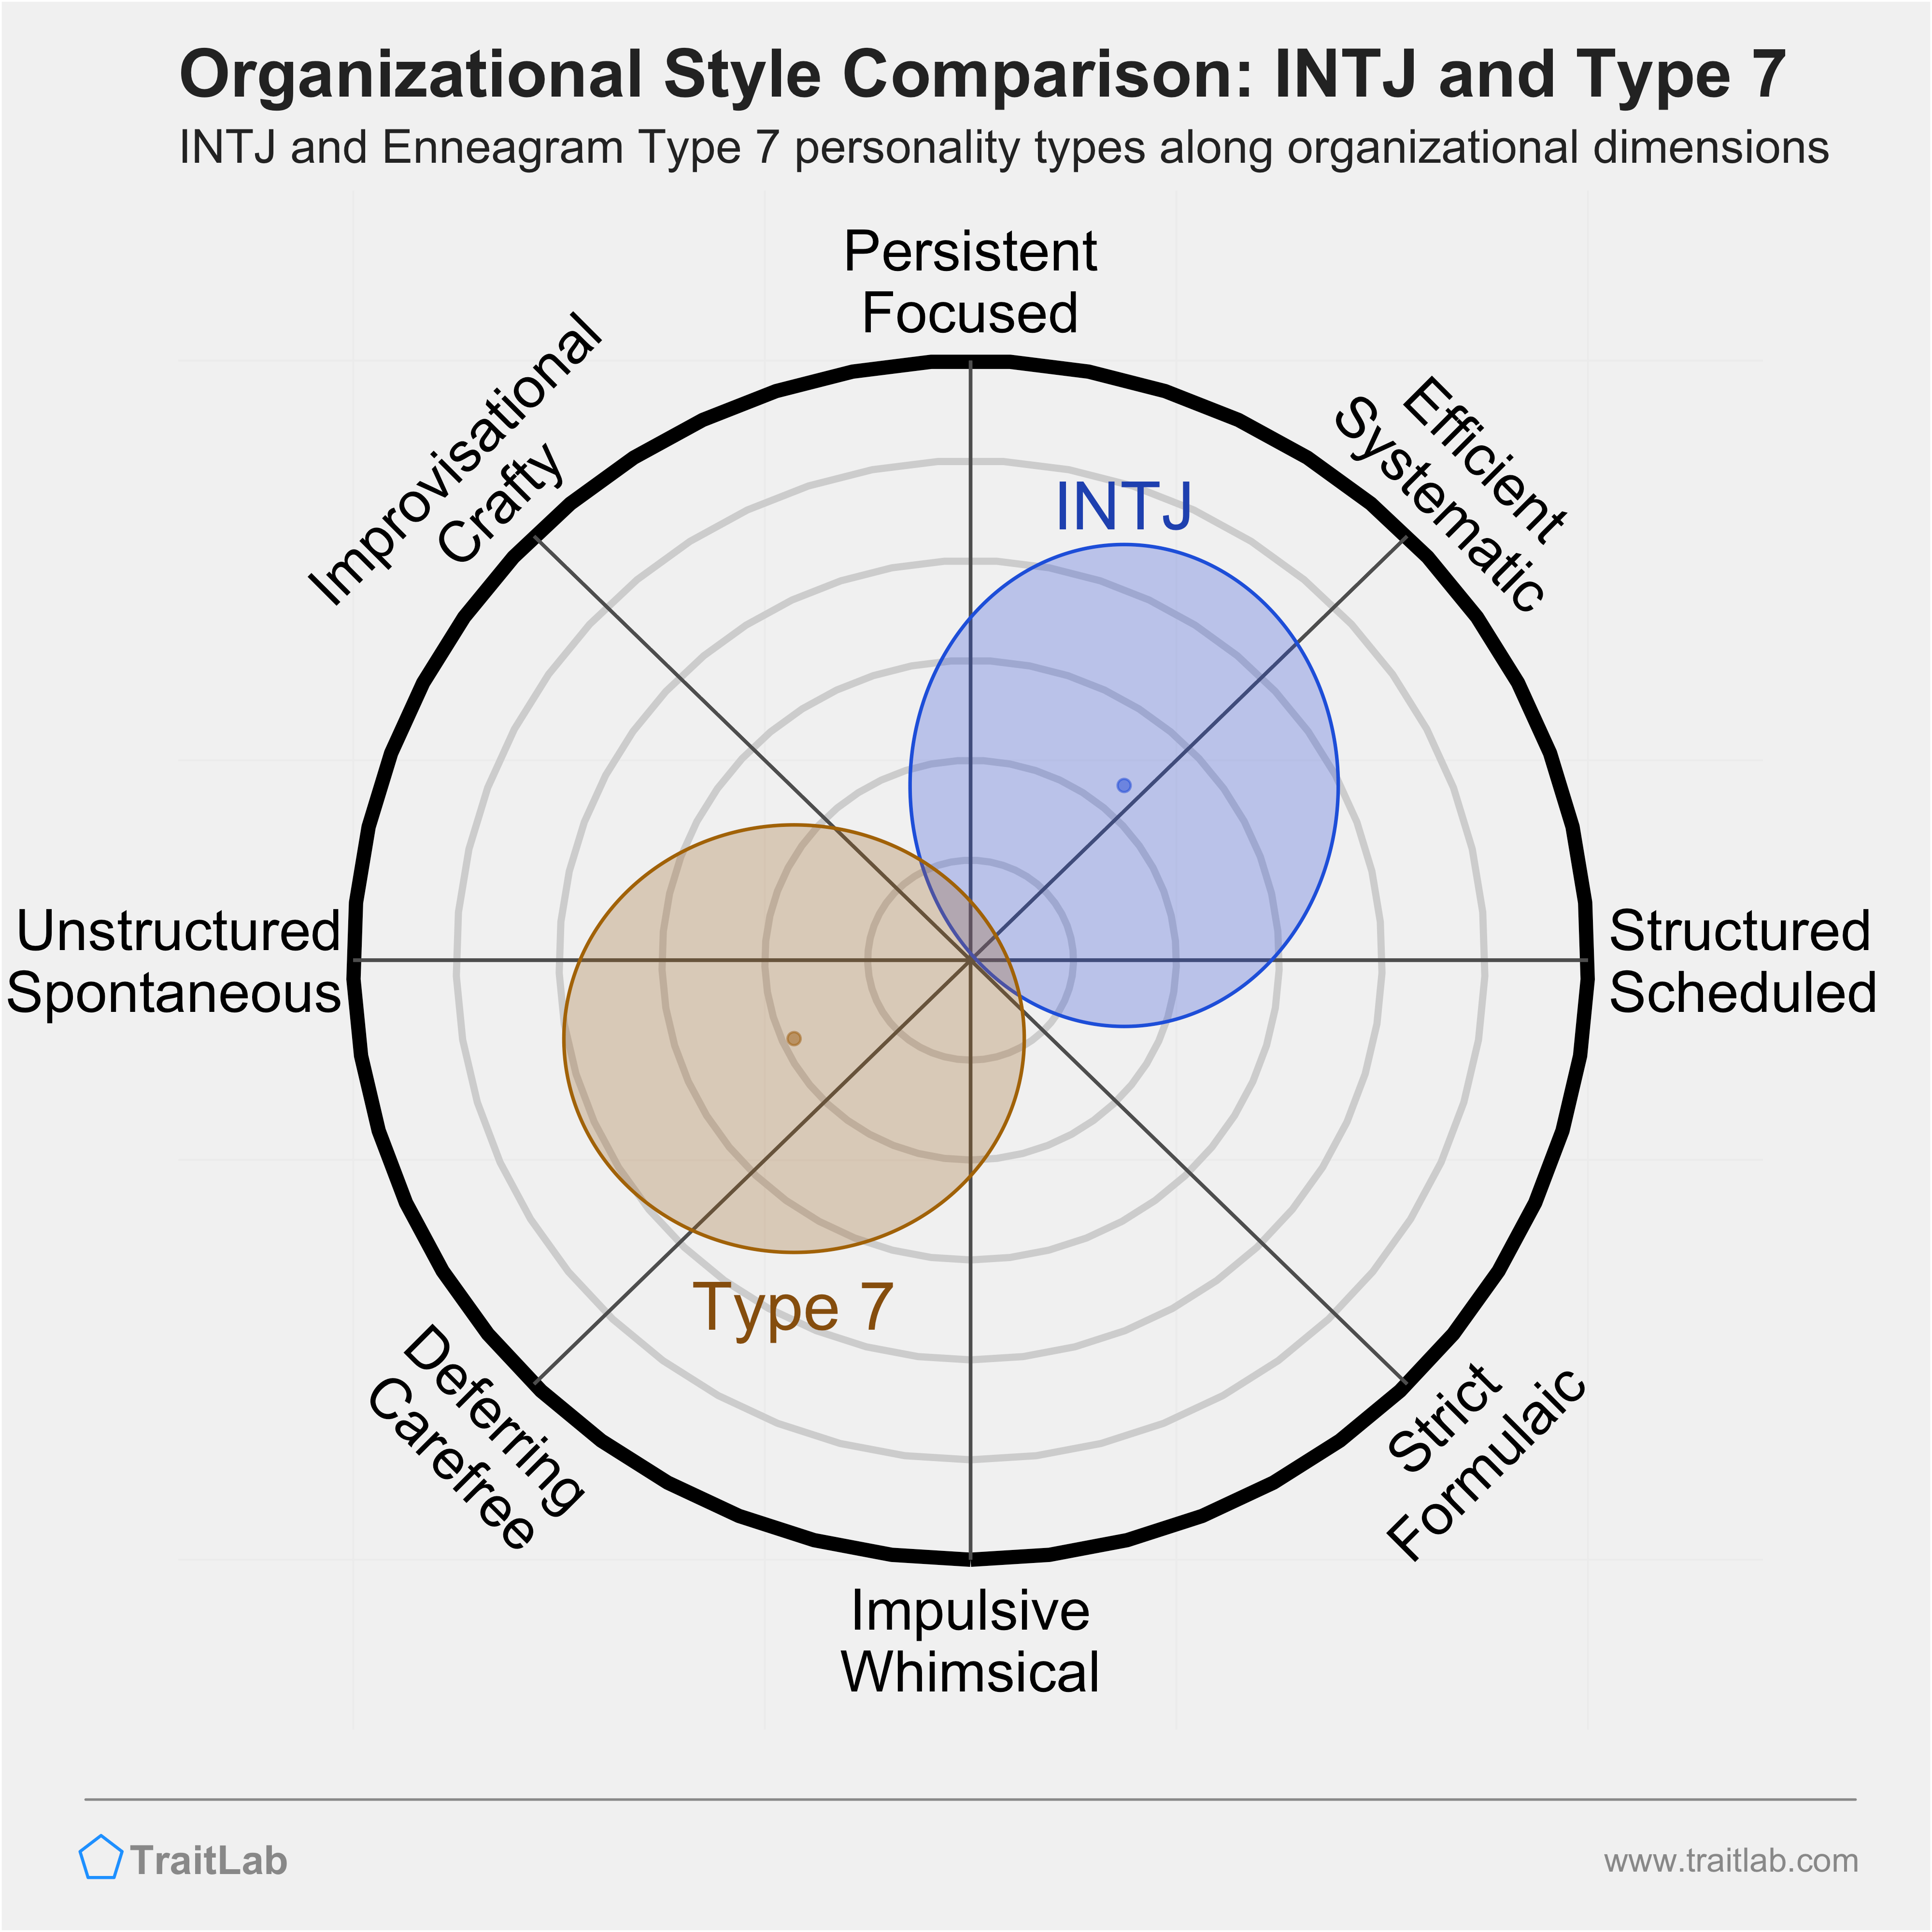 INTJ and Type 7 comparison across organizational dimensions